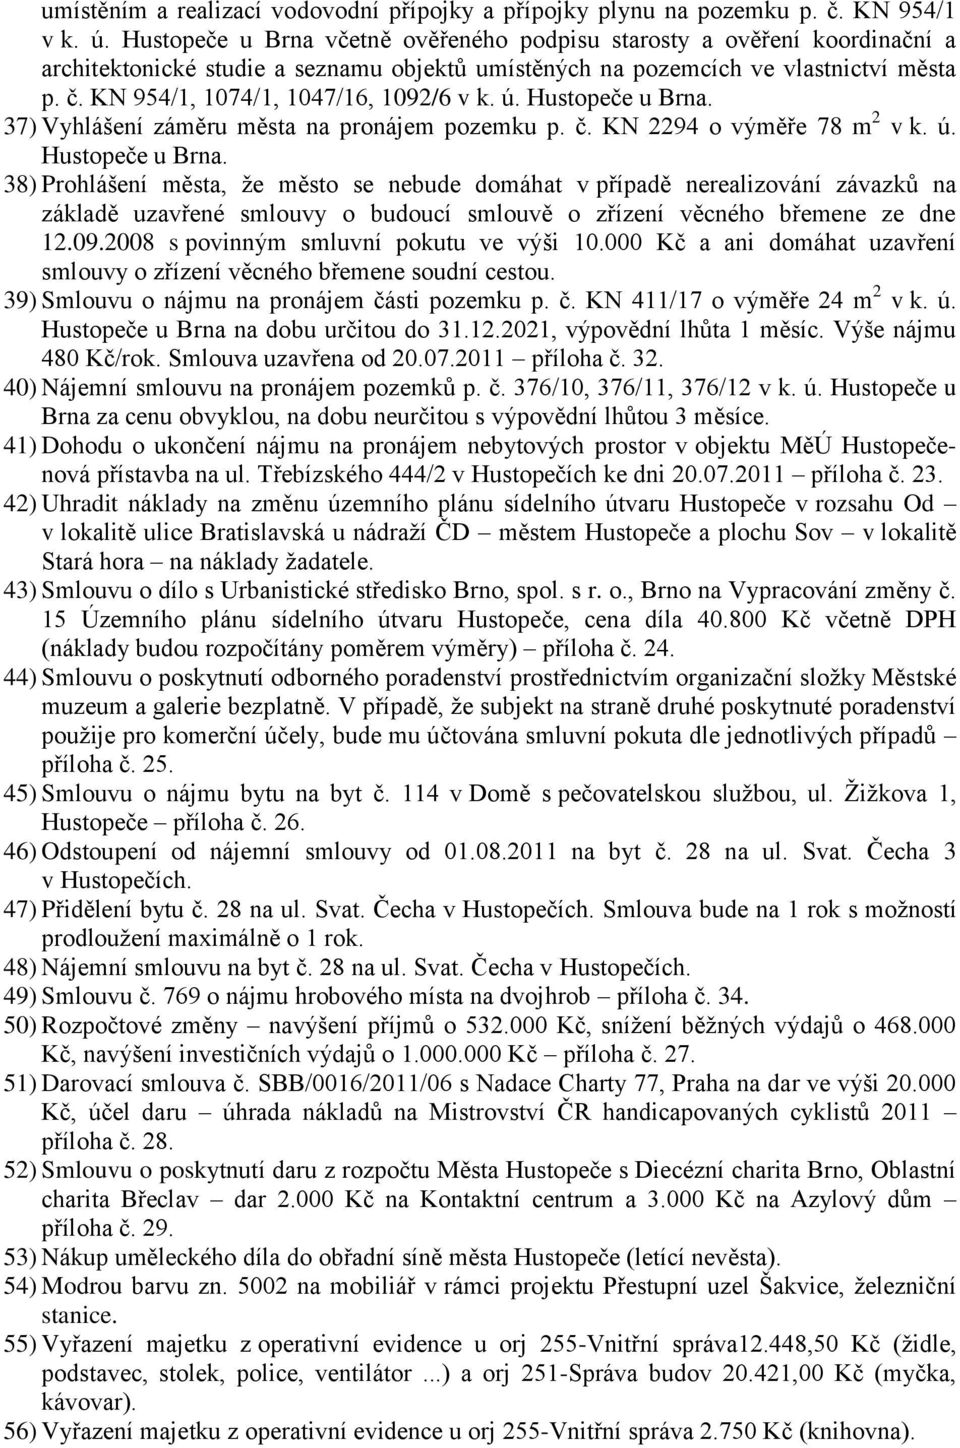 KN 954/1, 1074/1, 1047/16, 1092/6 v k. ú. Hustopeče u Brna.